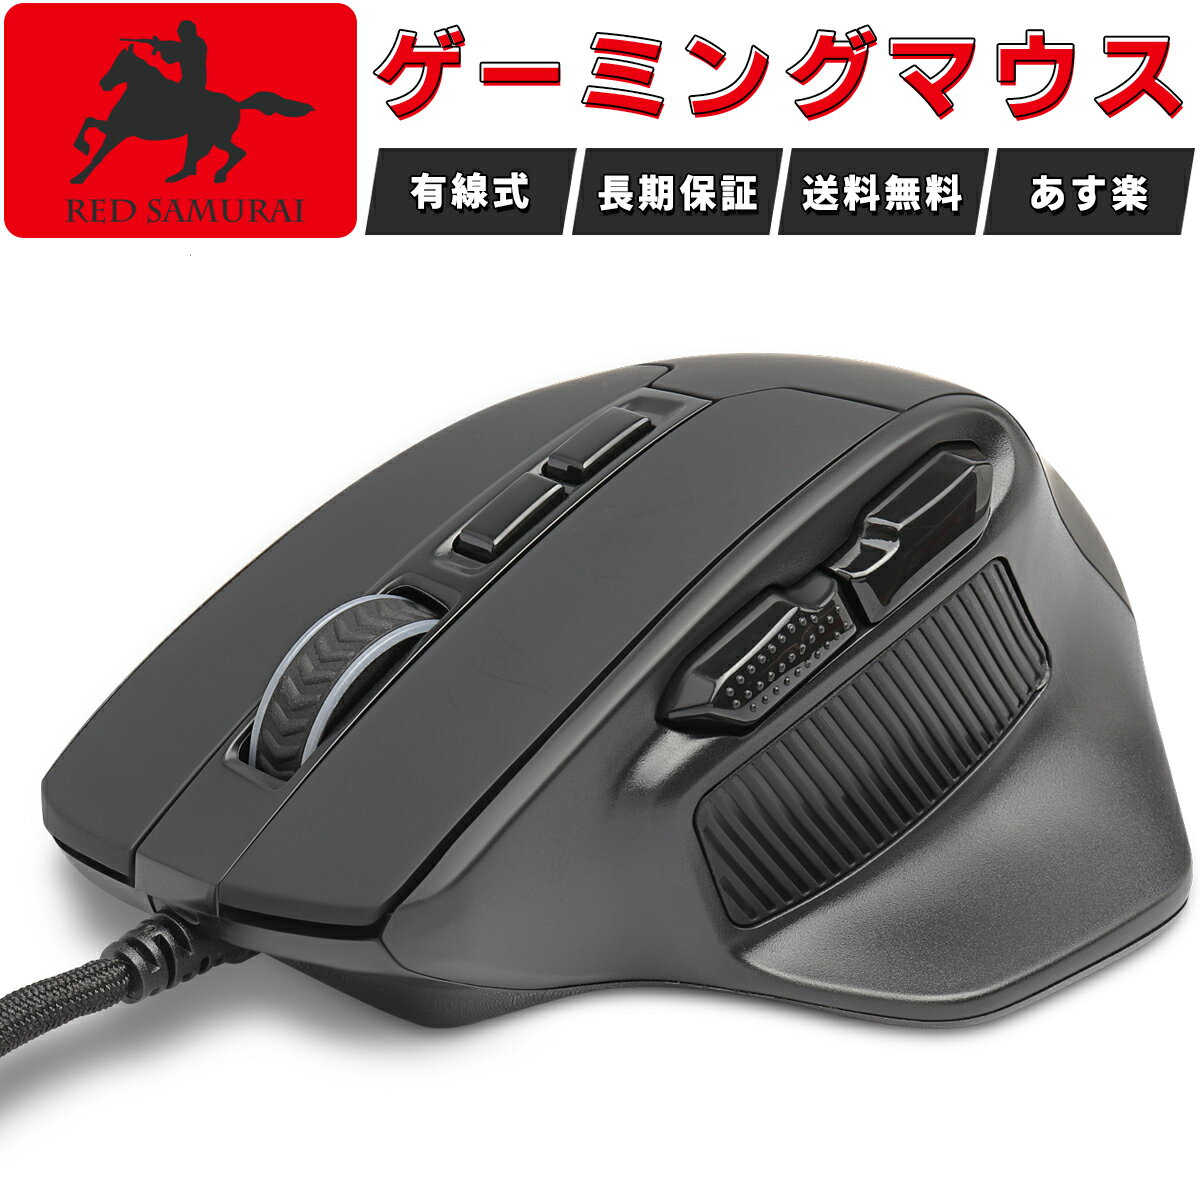 【 RED SAMURAI 】ゲーミングマウス 有線 マウス 12400dpi 1000Hz RD-GMMS02-BK プログラムボタン サイドボタン 安定…